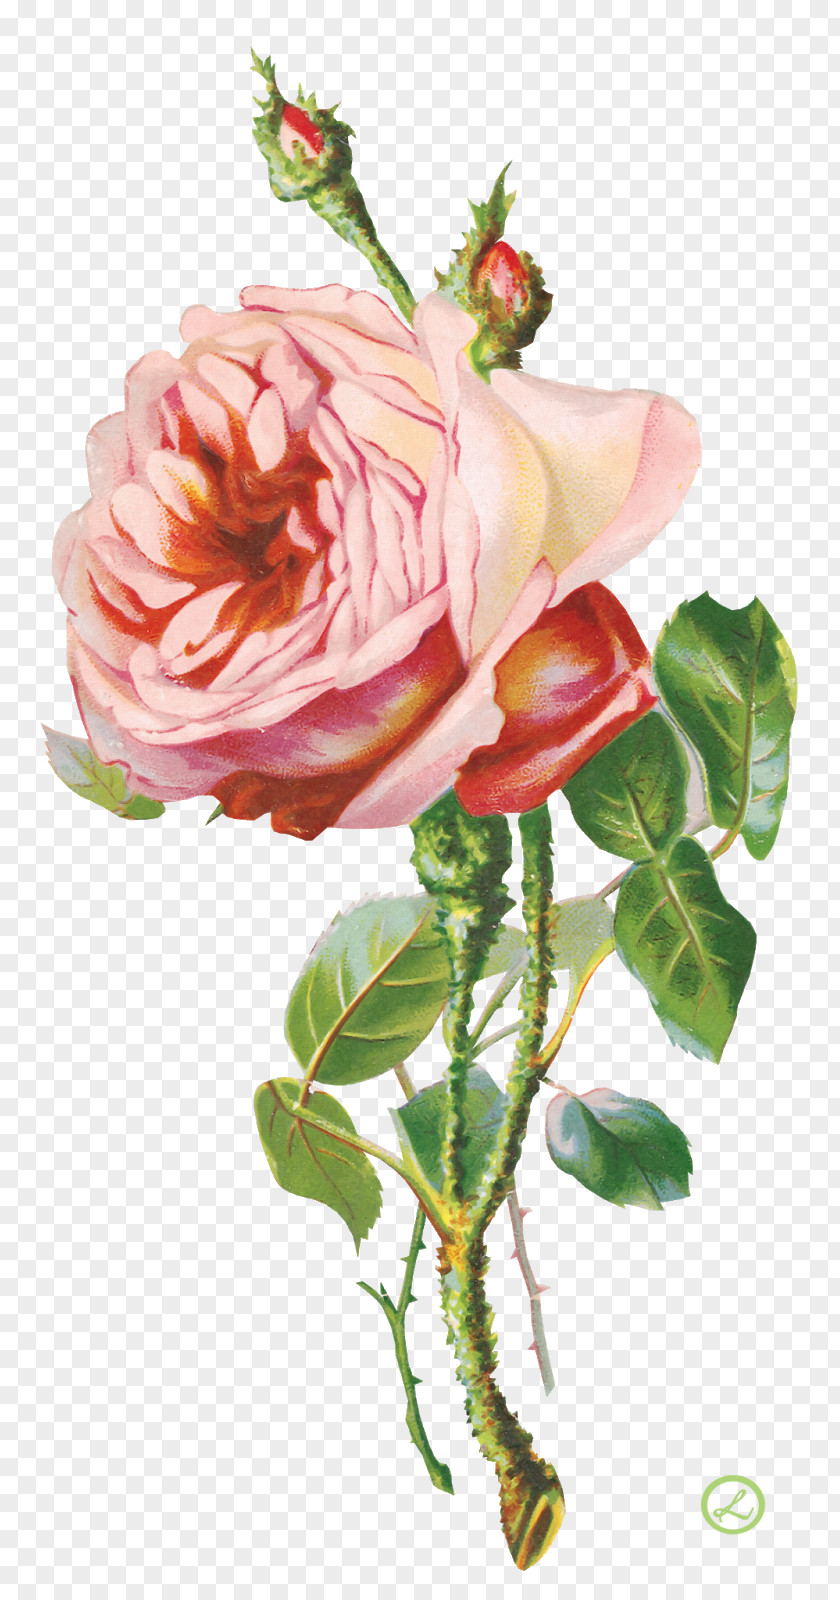 Flower Clip Art Garden Roses Image PNG